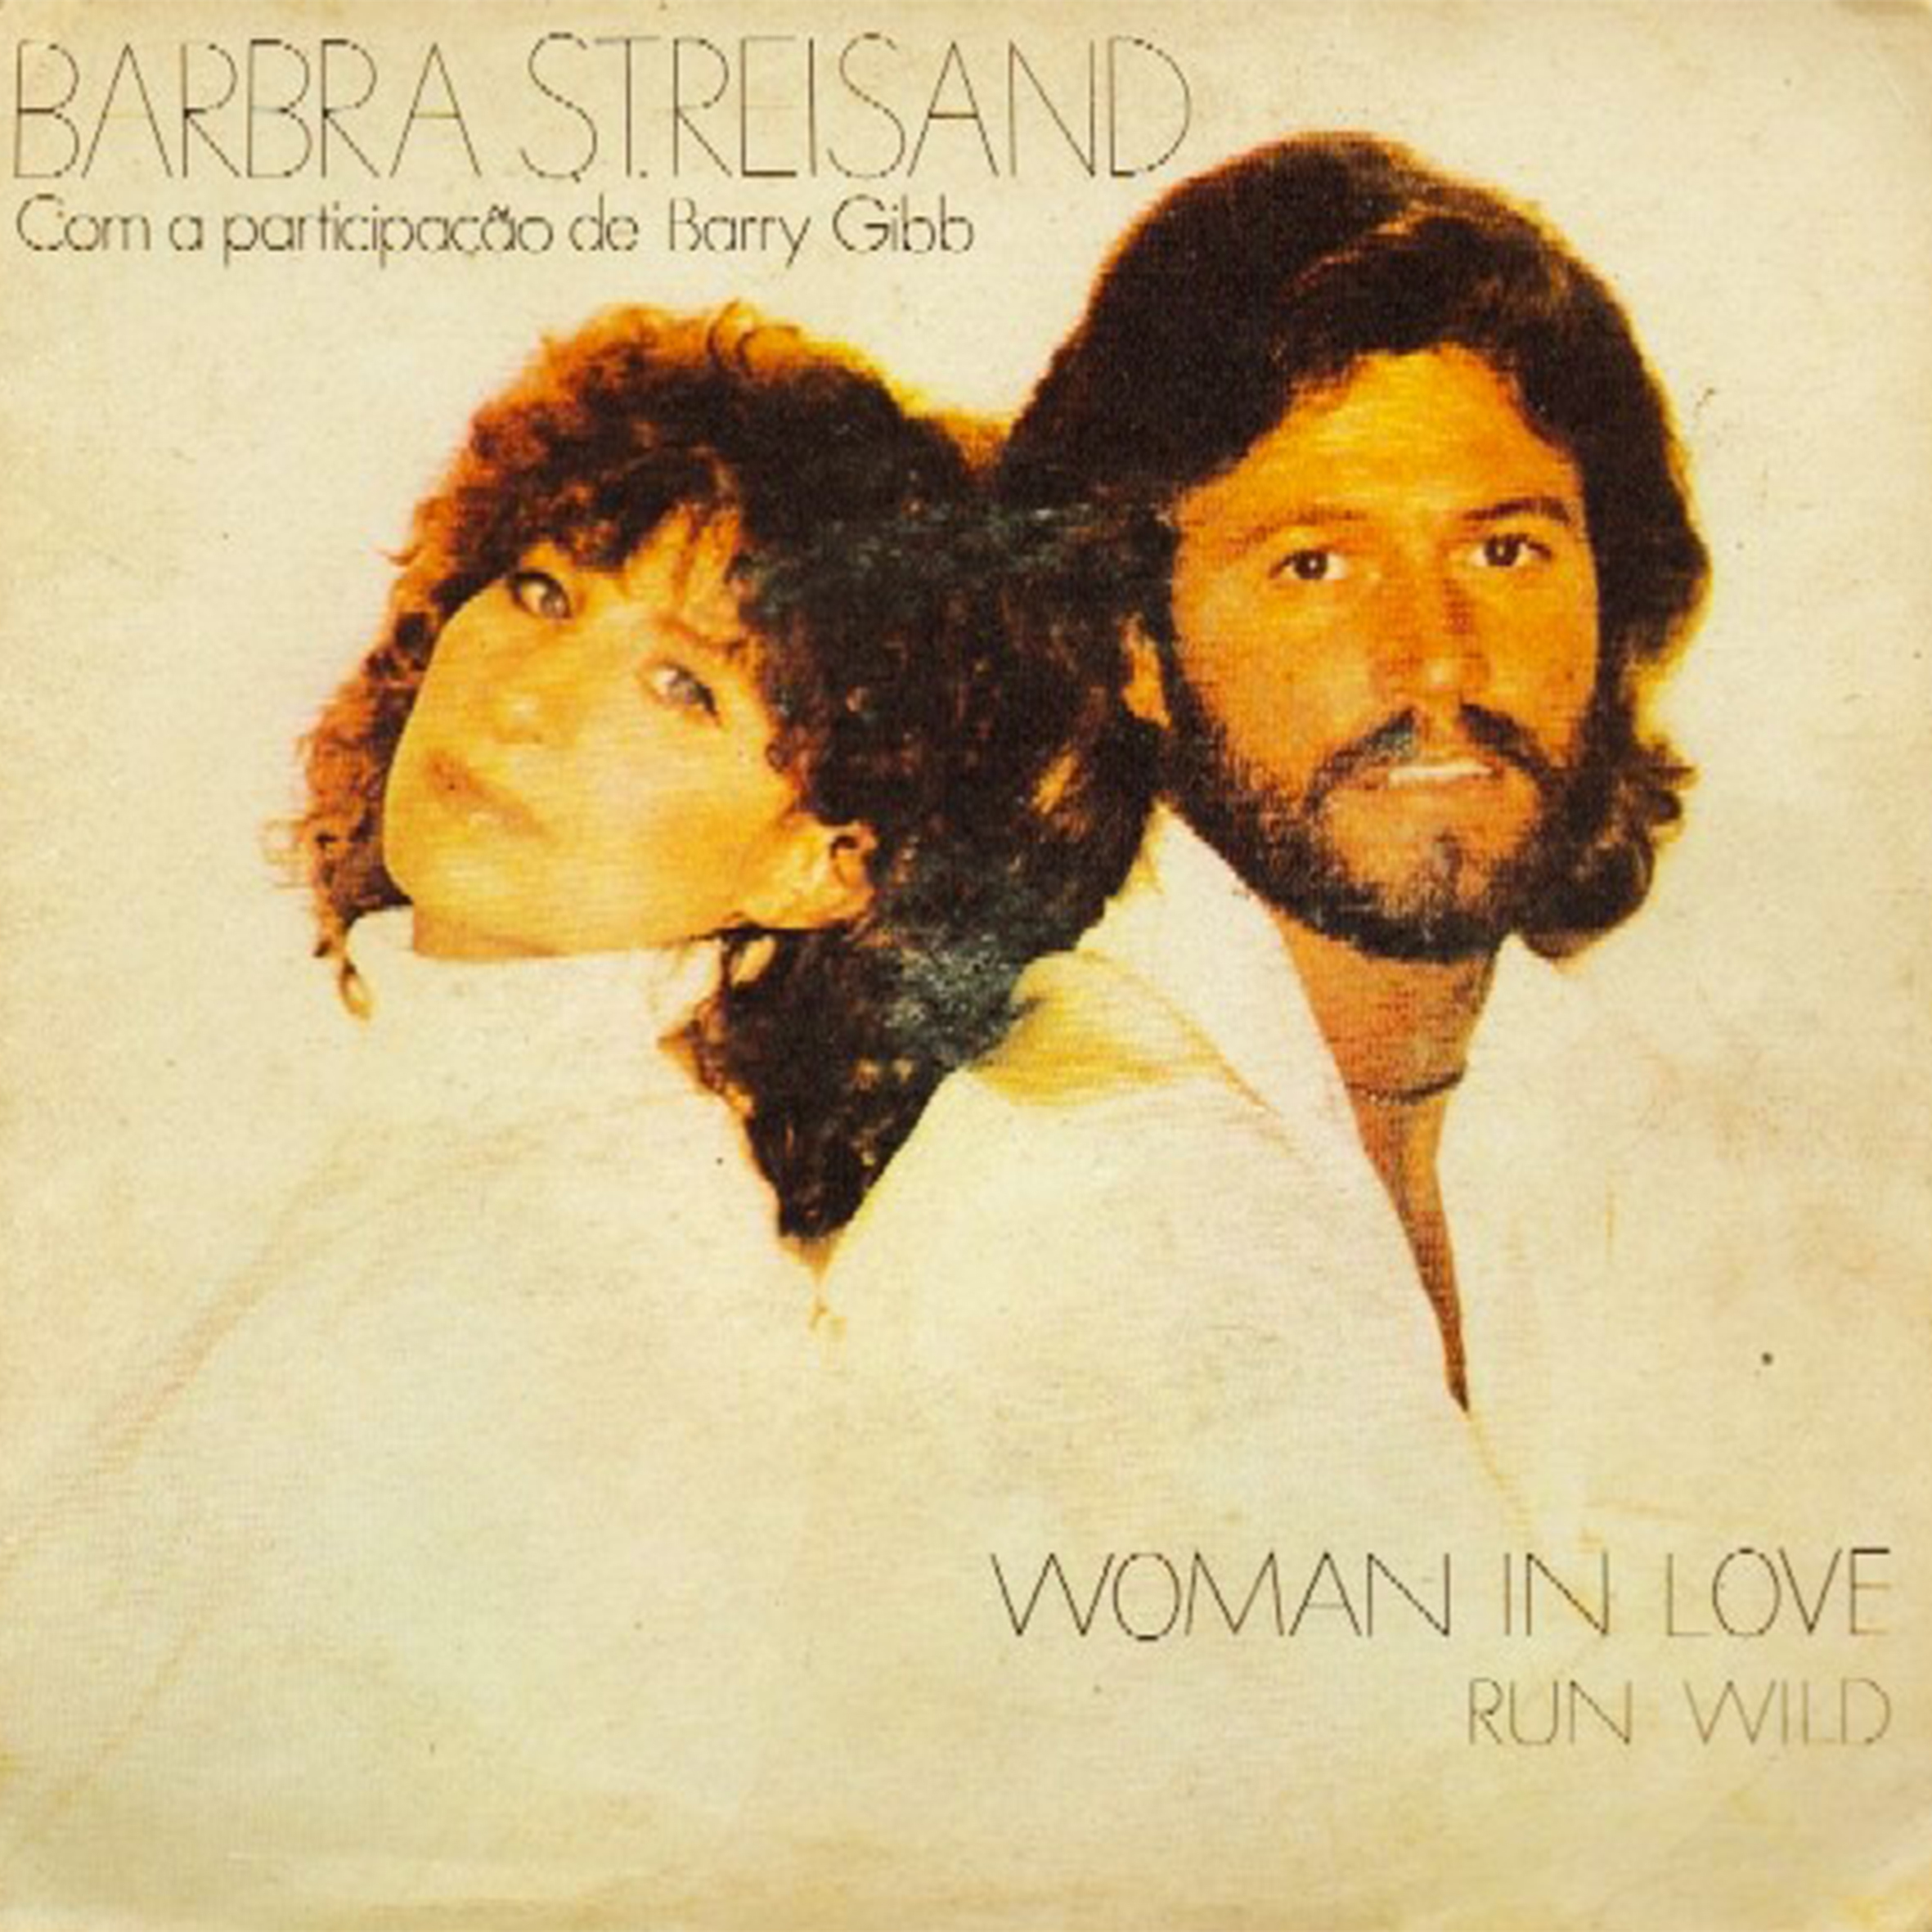 Vinil Compacto - Barbra Streisand - Woman In Love